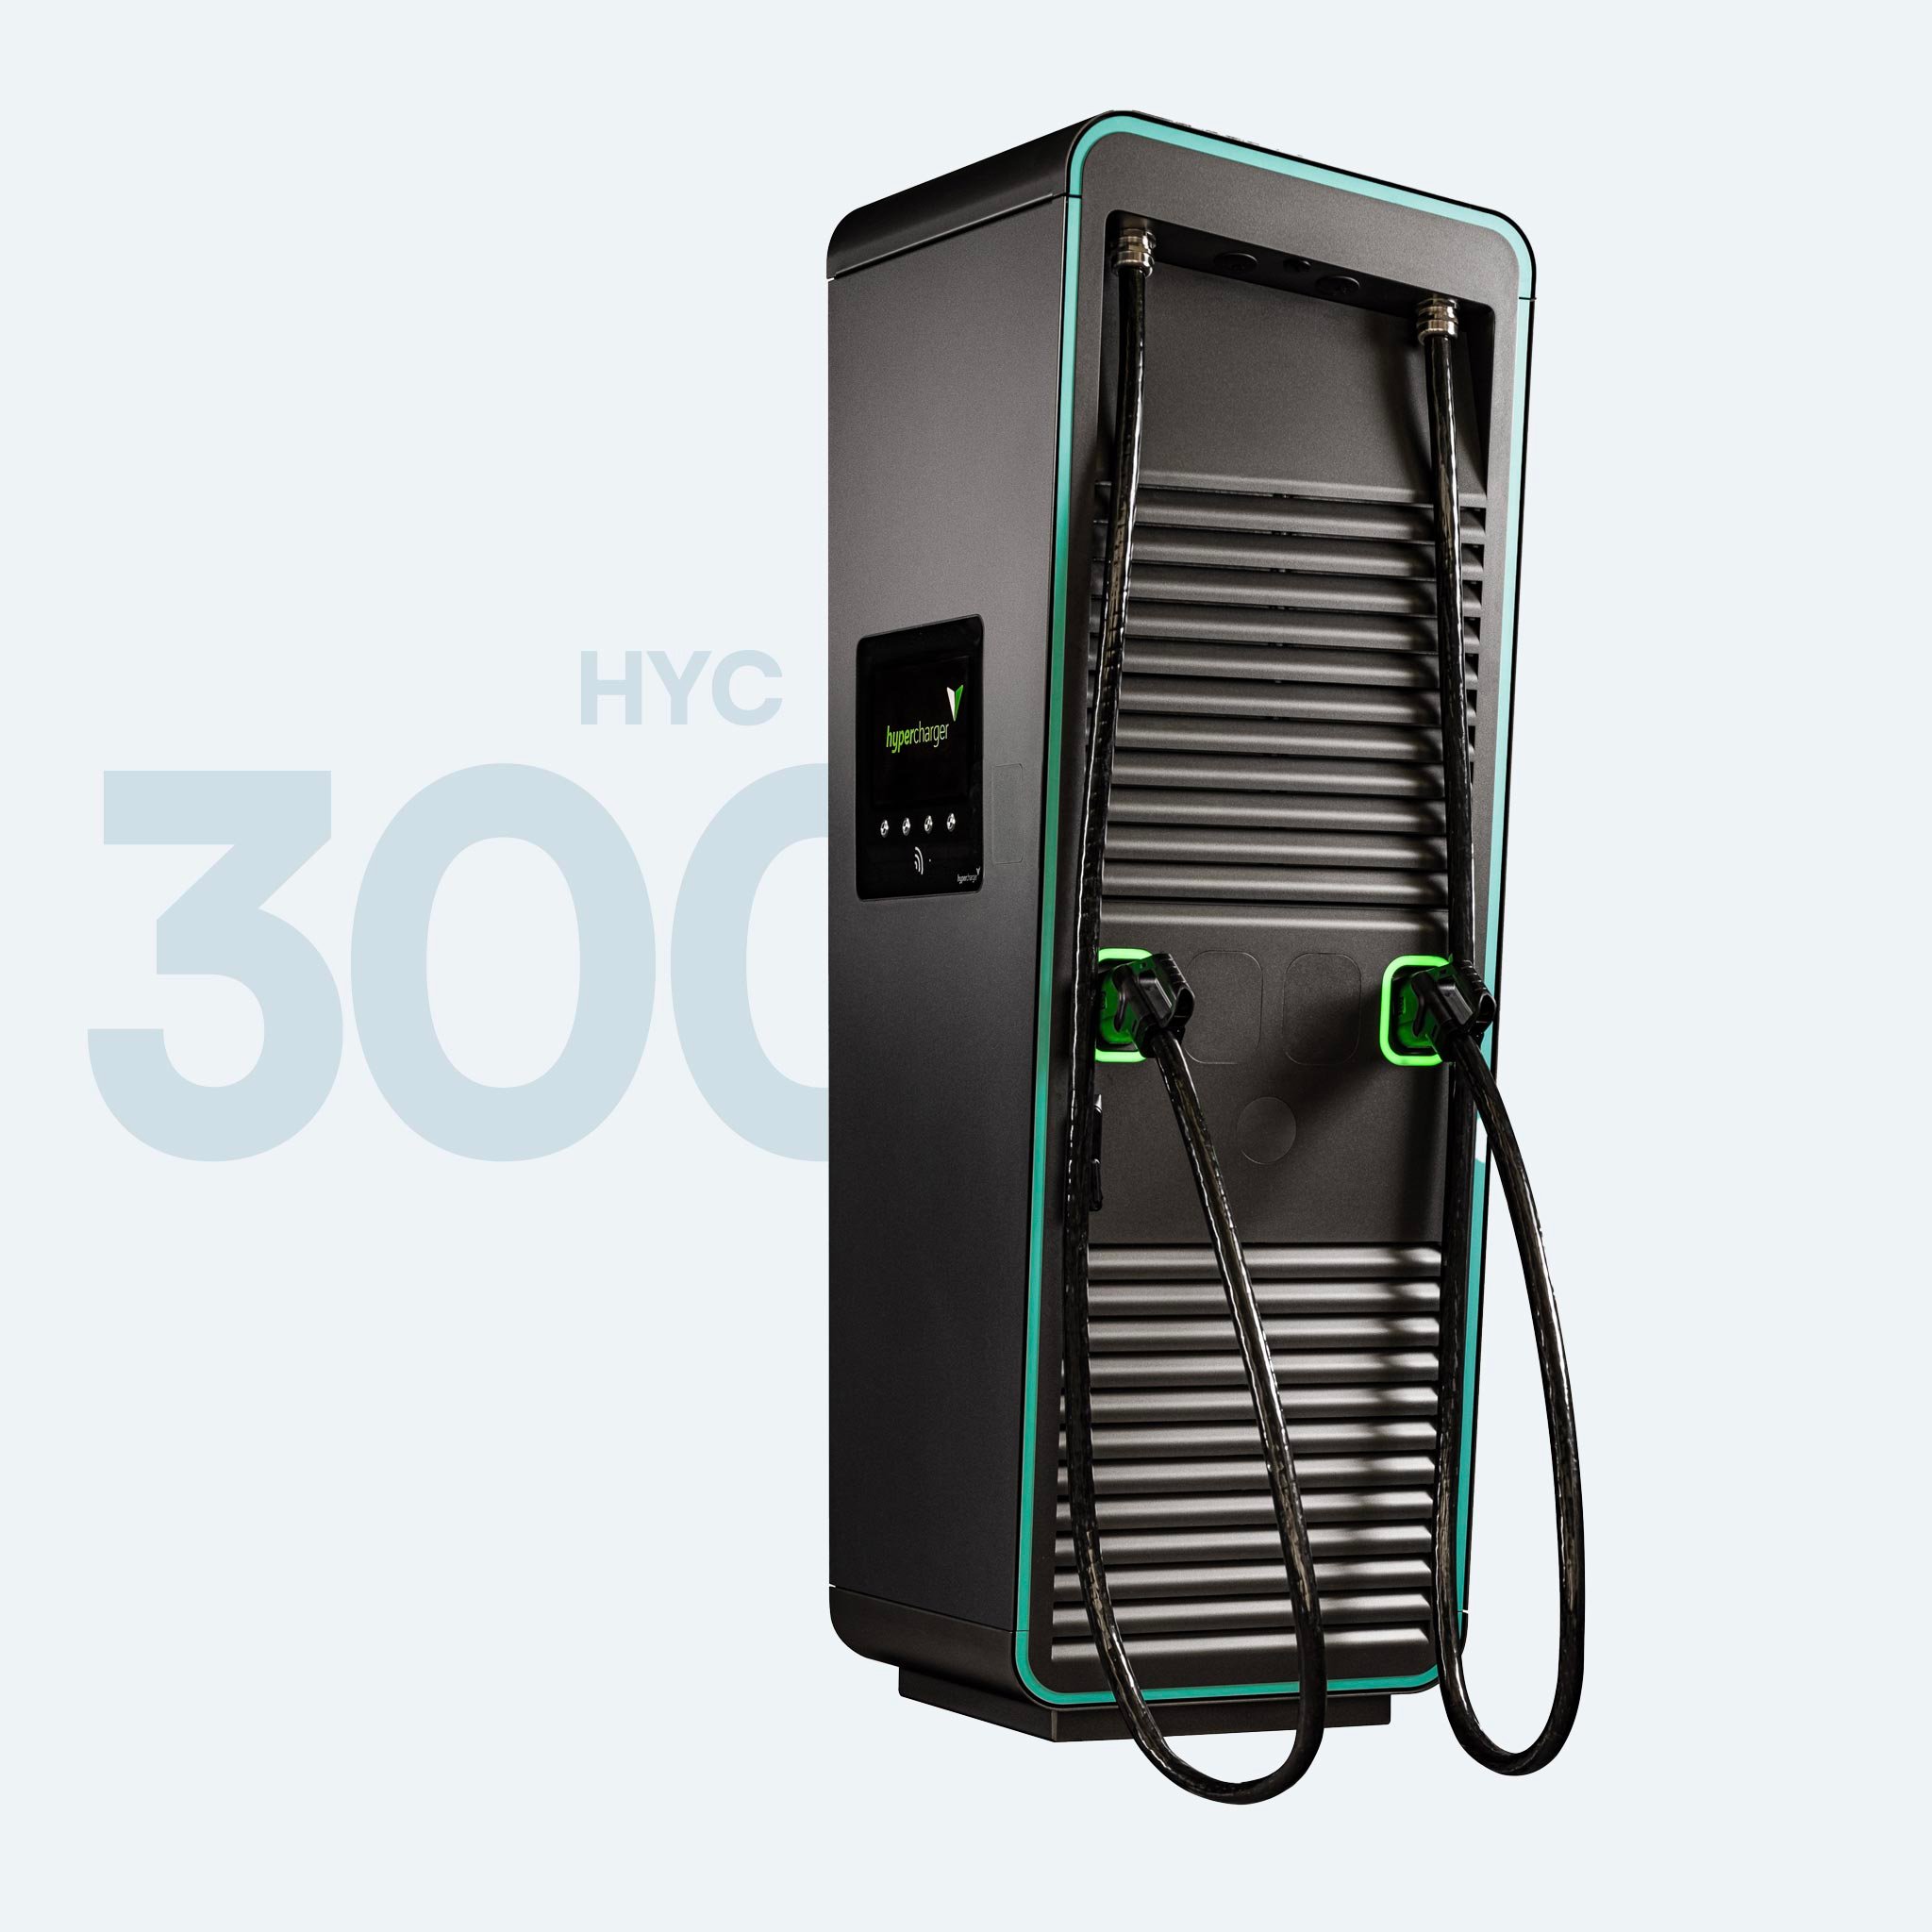 alpitronic hypercharger HYC 300 Schnellladestation - Individuell konfigurierbar